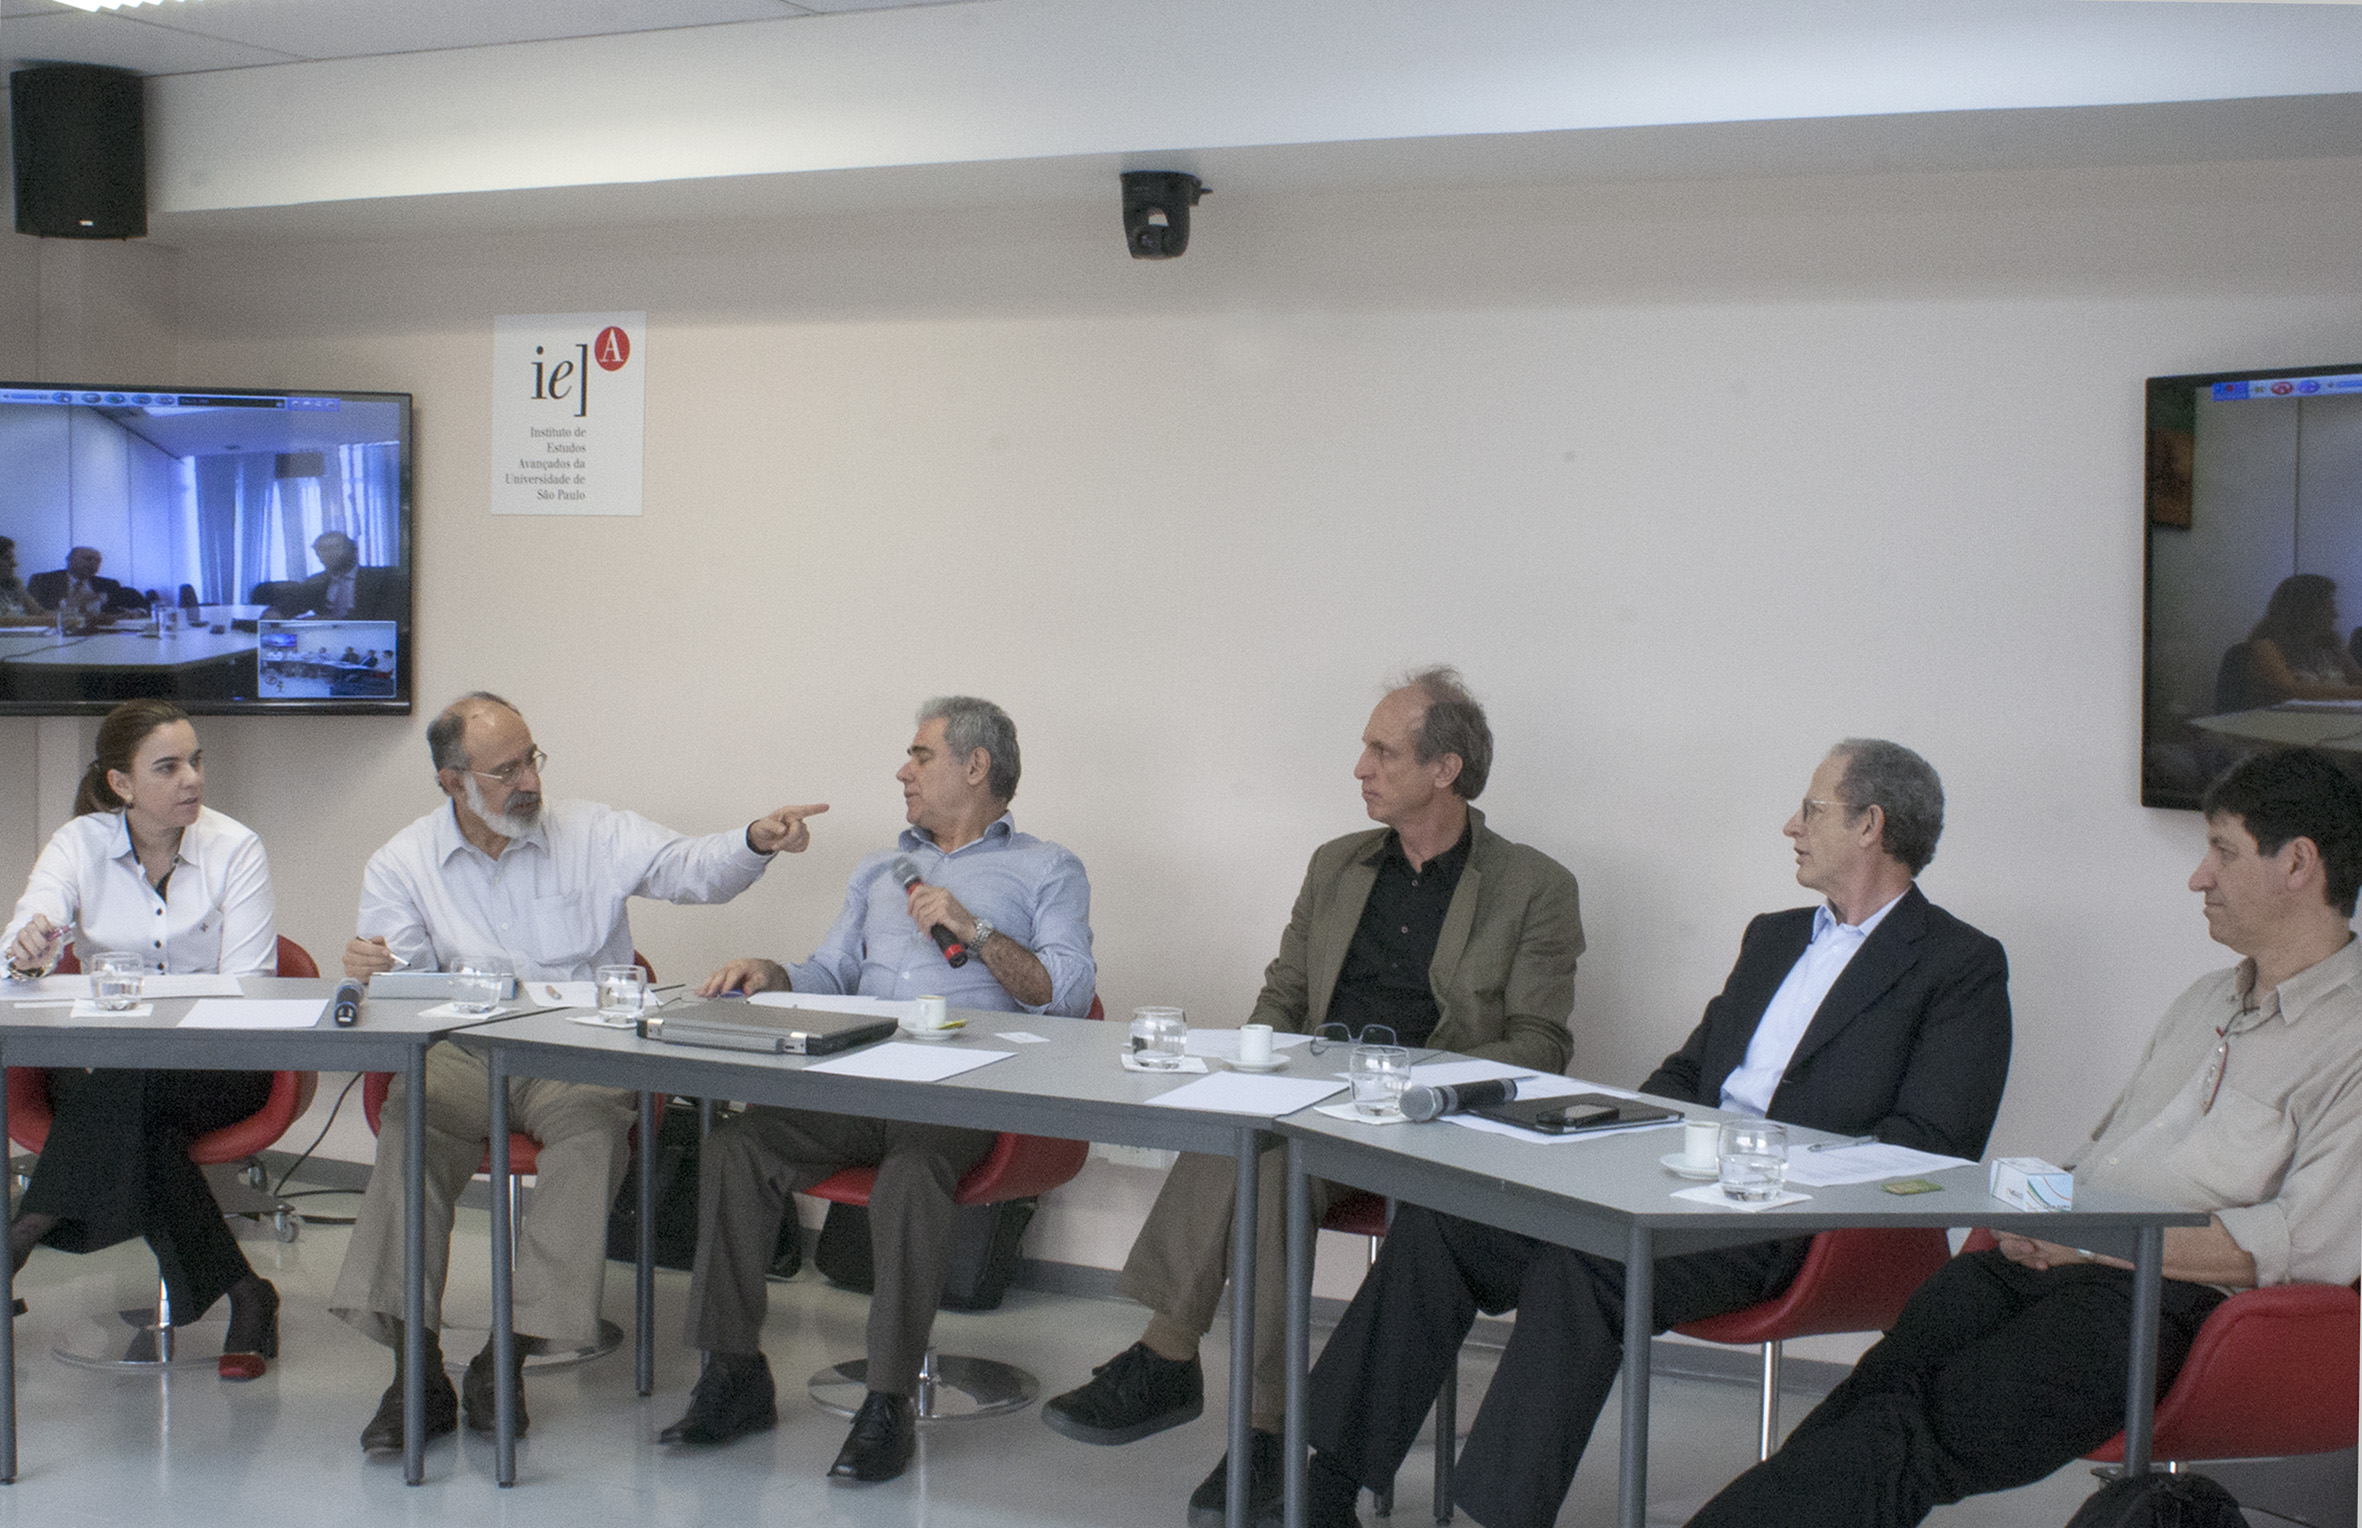 Luciane Ortega, Guilherme Ary Plonski, Roberto Mendonça Faria, Martin Grossmann, Pedro Wongtschwski e Mário Sérgio Salerno